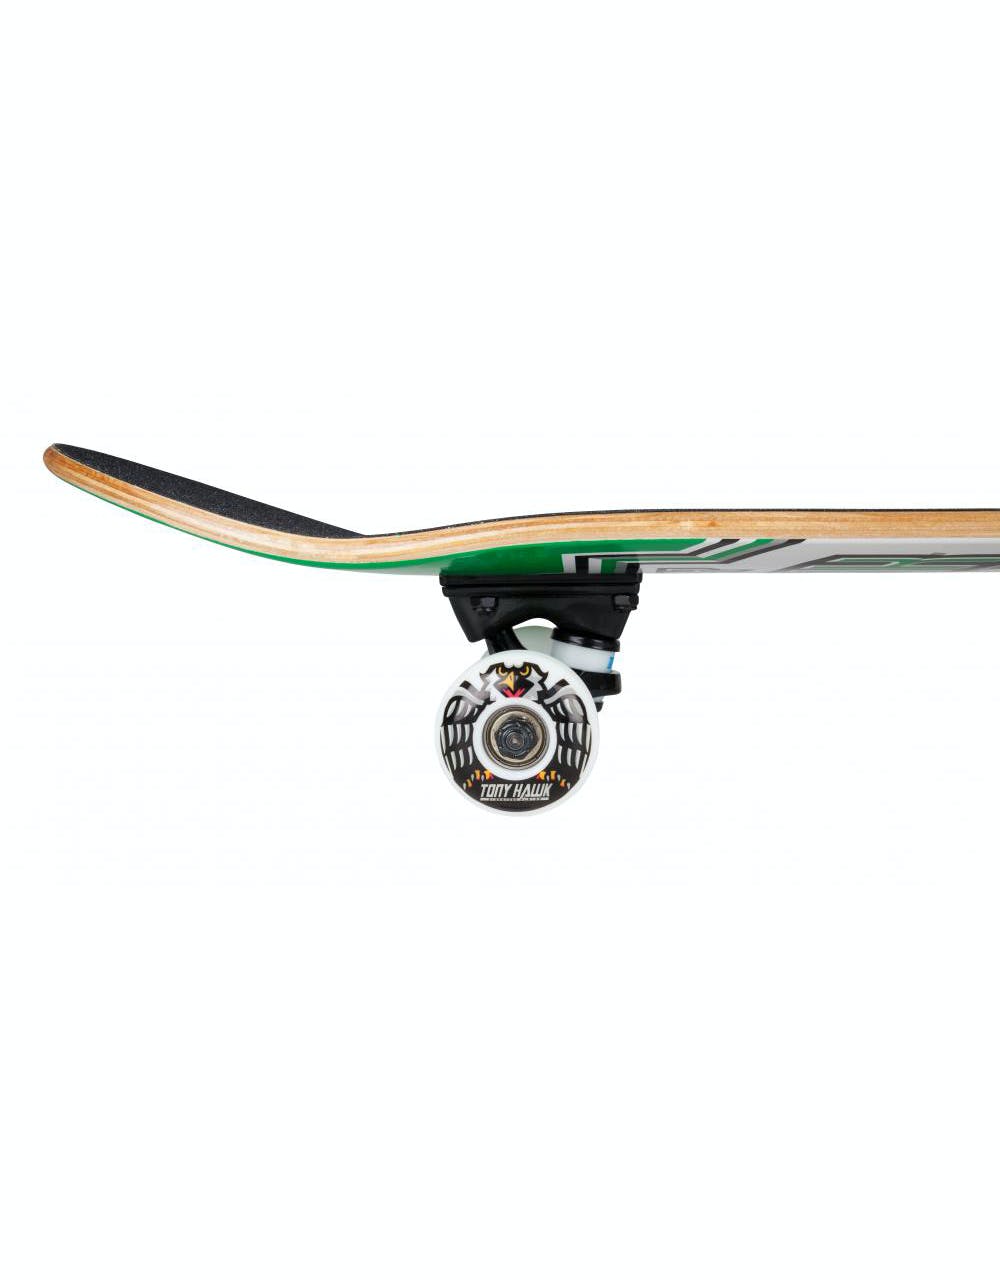 Tony Hawk 540 Homerun Complete Skateboard - 7.75"